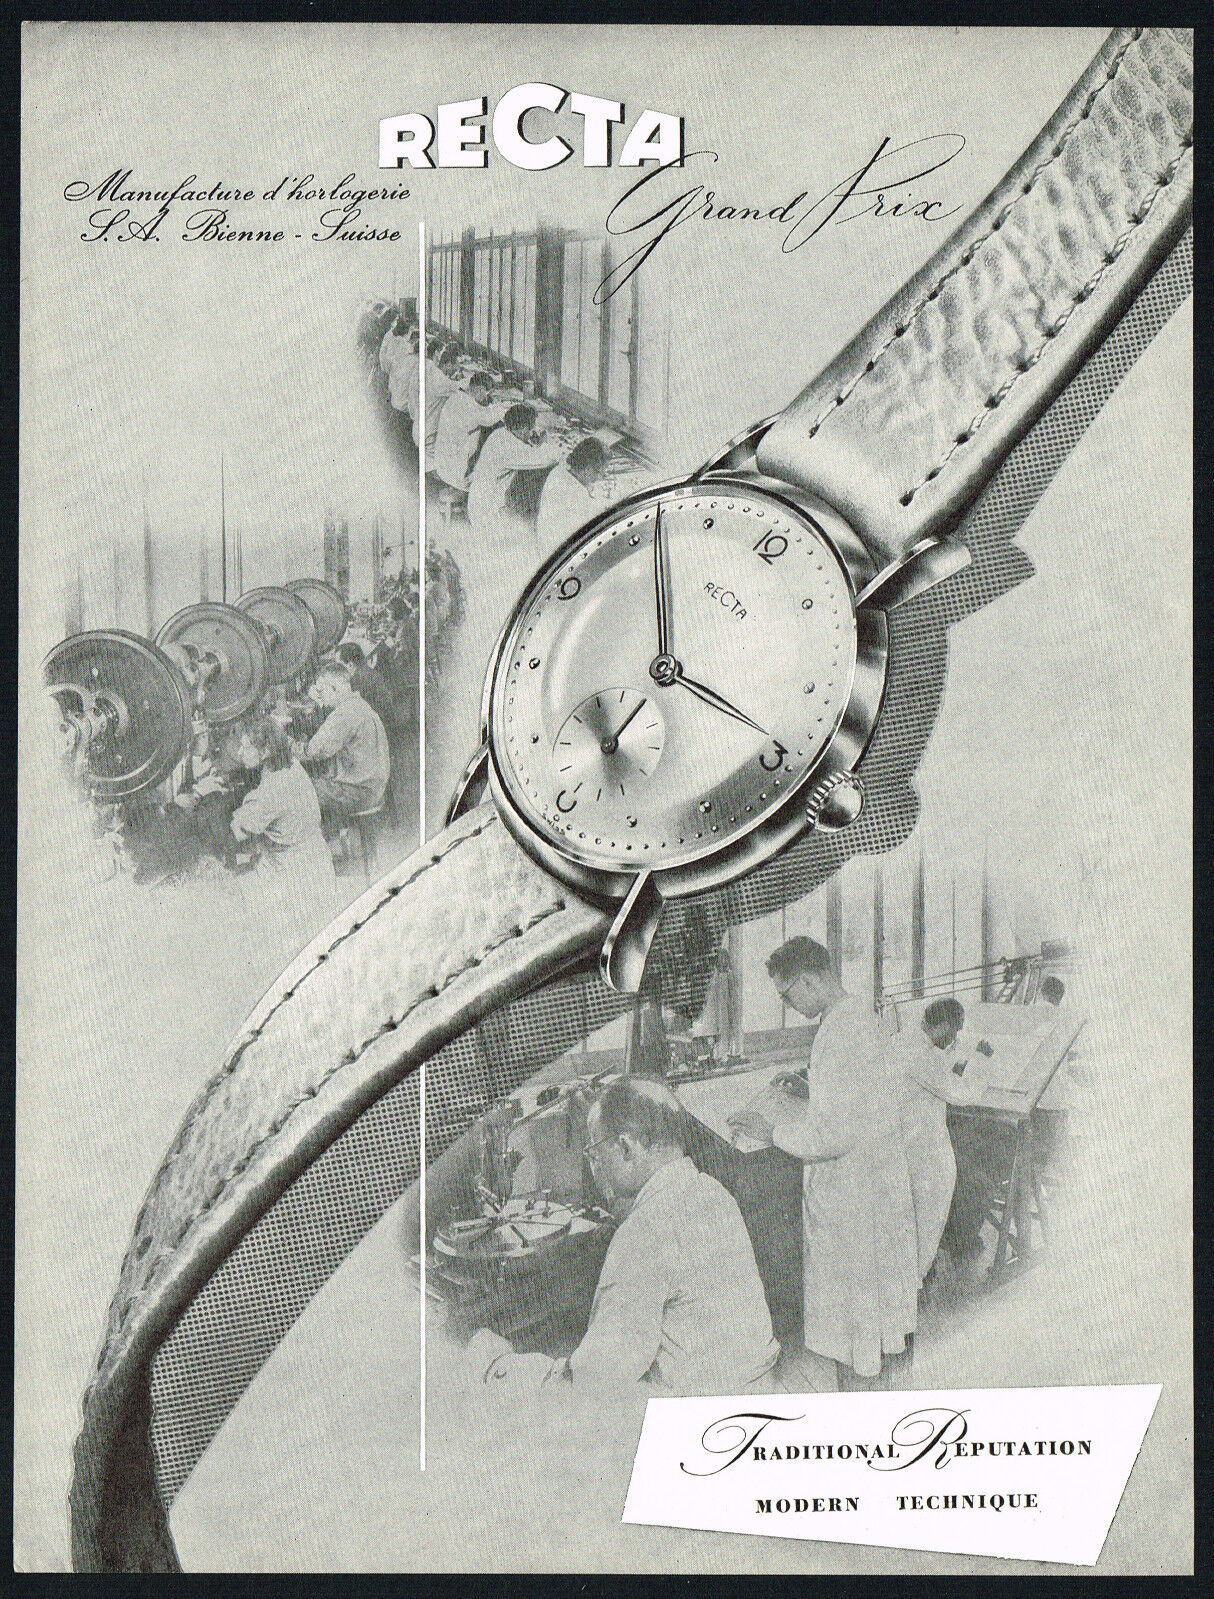 1950 Vintage Recta Grand Prix Watch Factory Mid Century Photo Art Print Ad